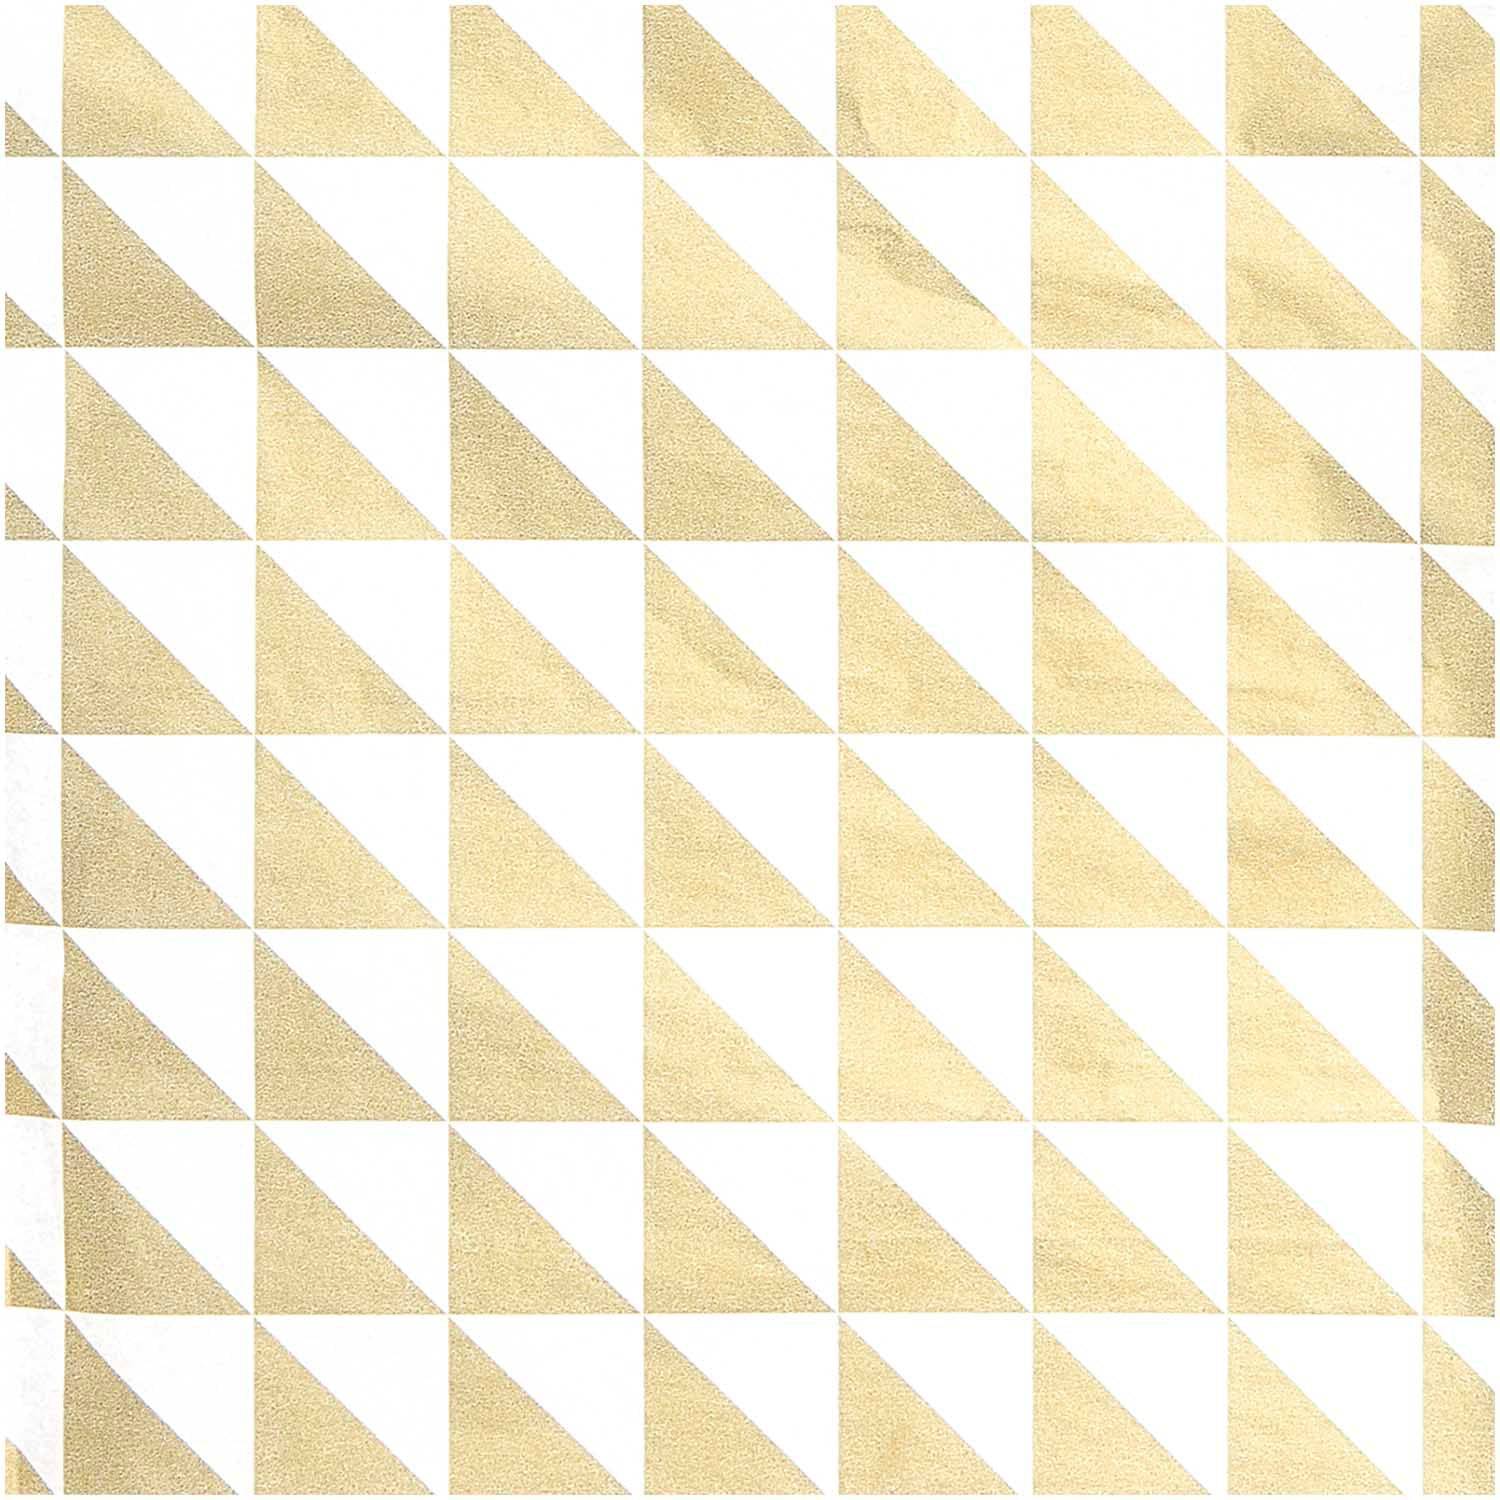 Seidenpapier gold weiss Dreieck - Der Backmichgluecklich Online Shop